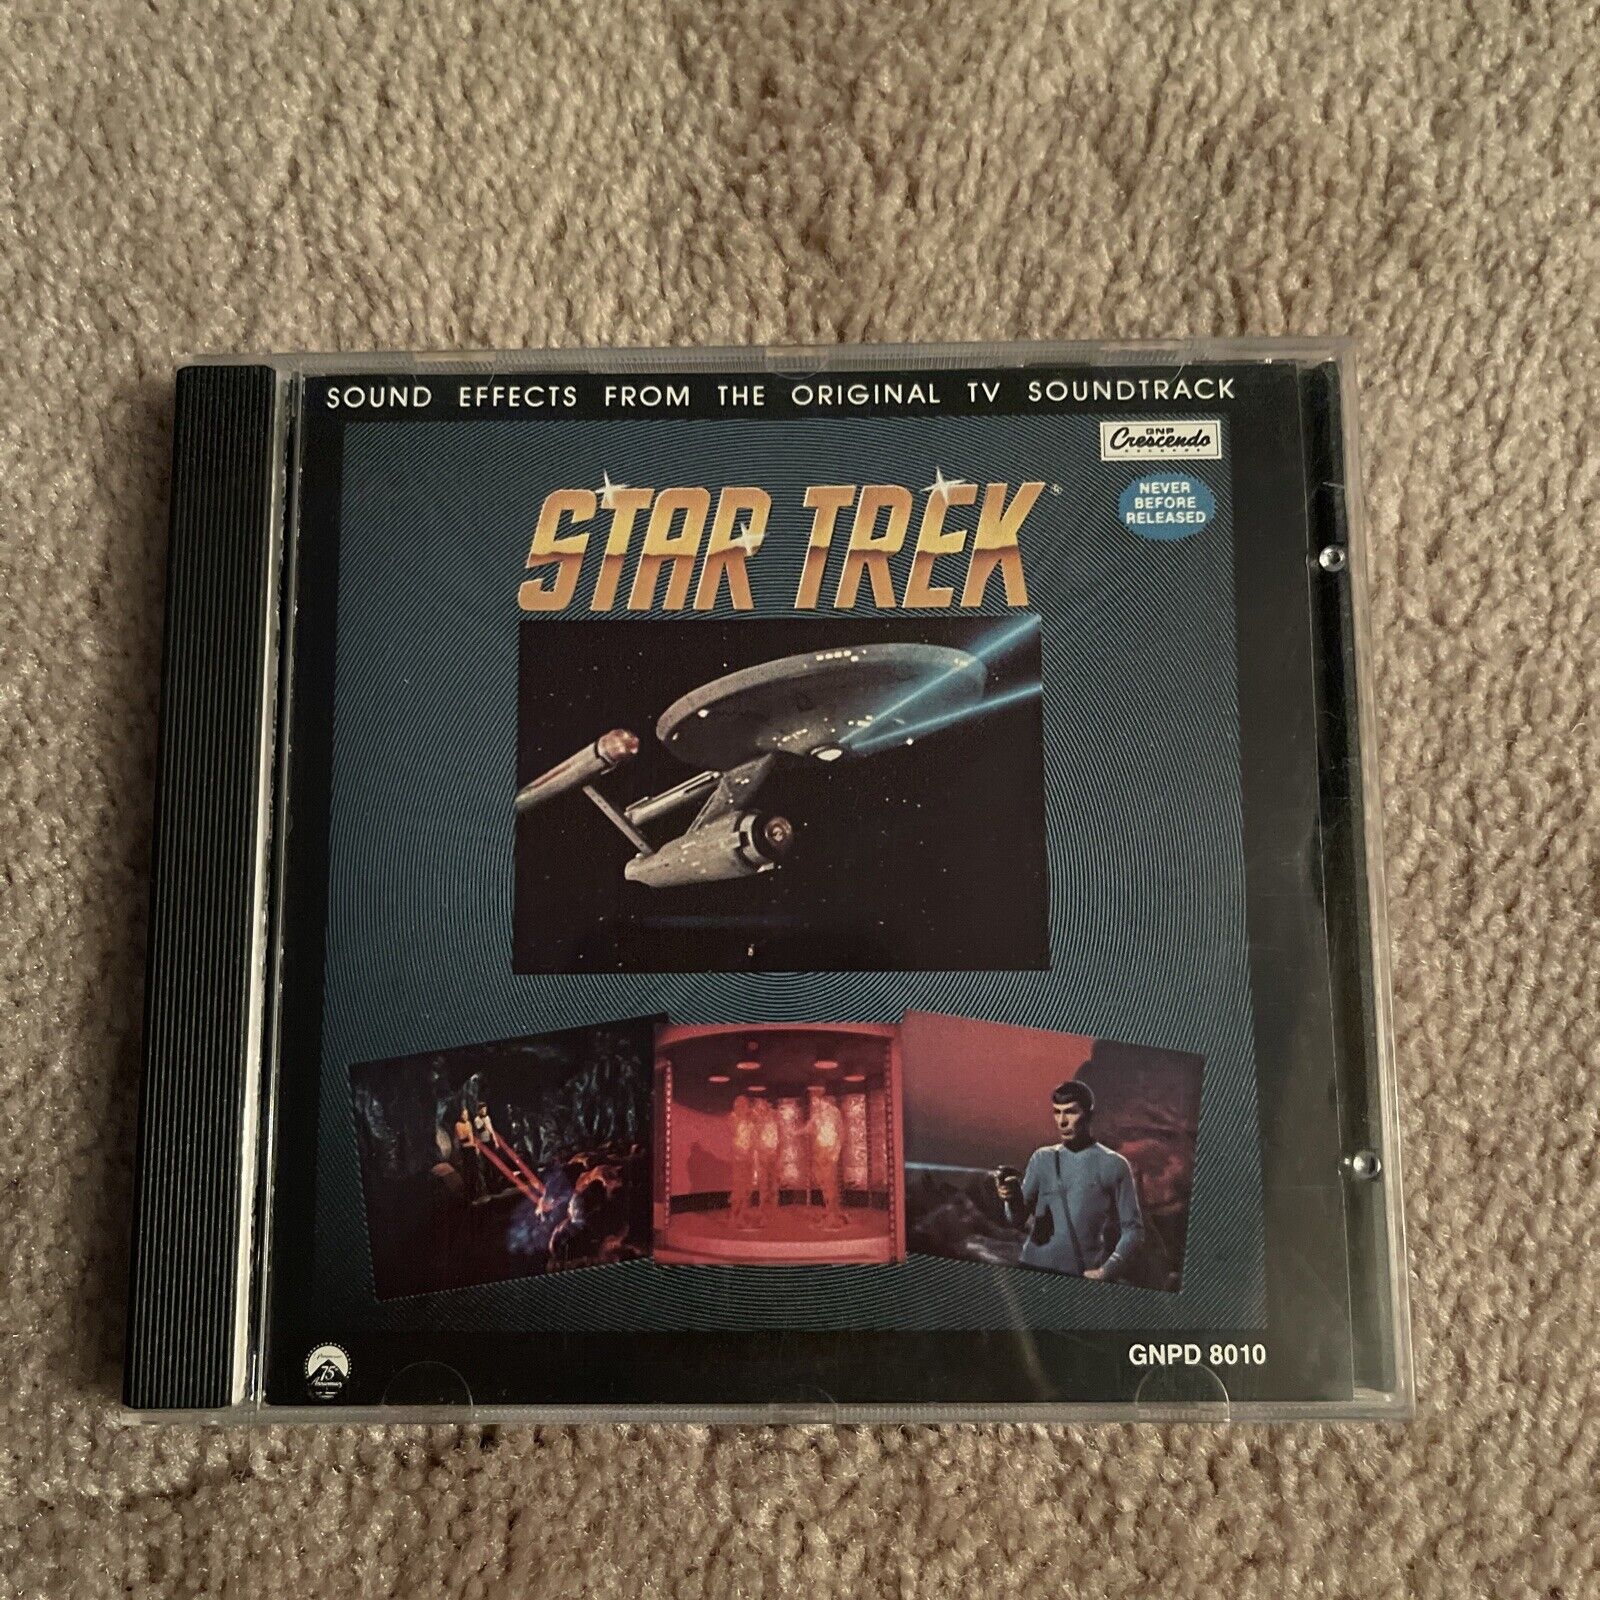 Star Trek: Sound Effects from the Original TV Soundtrack by Original Soundtrack